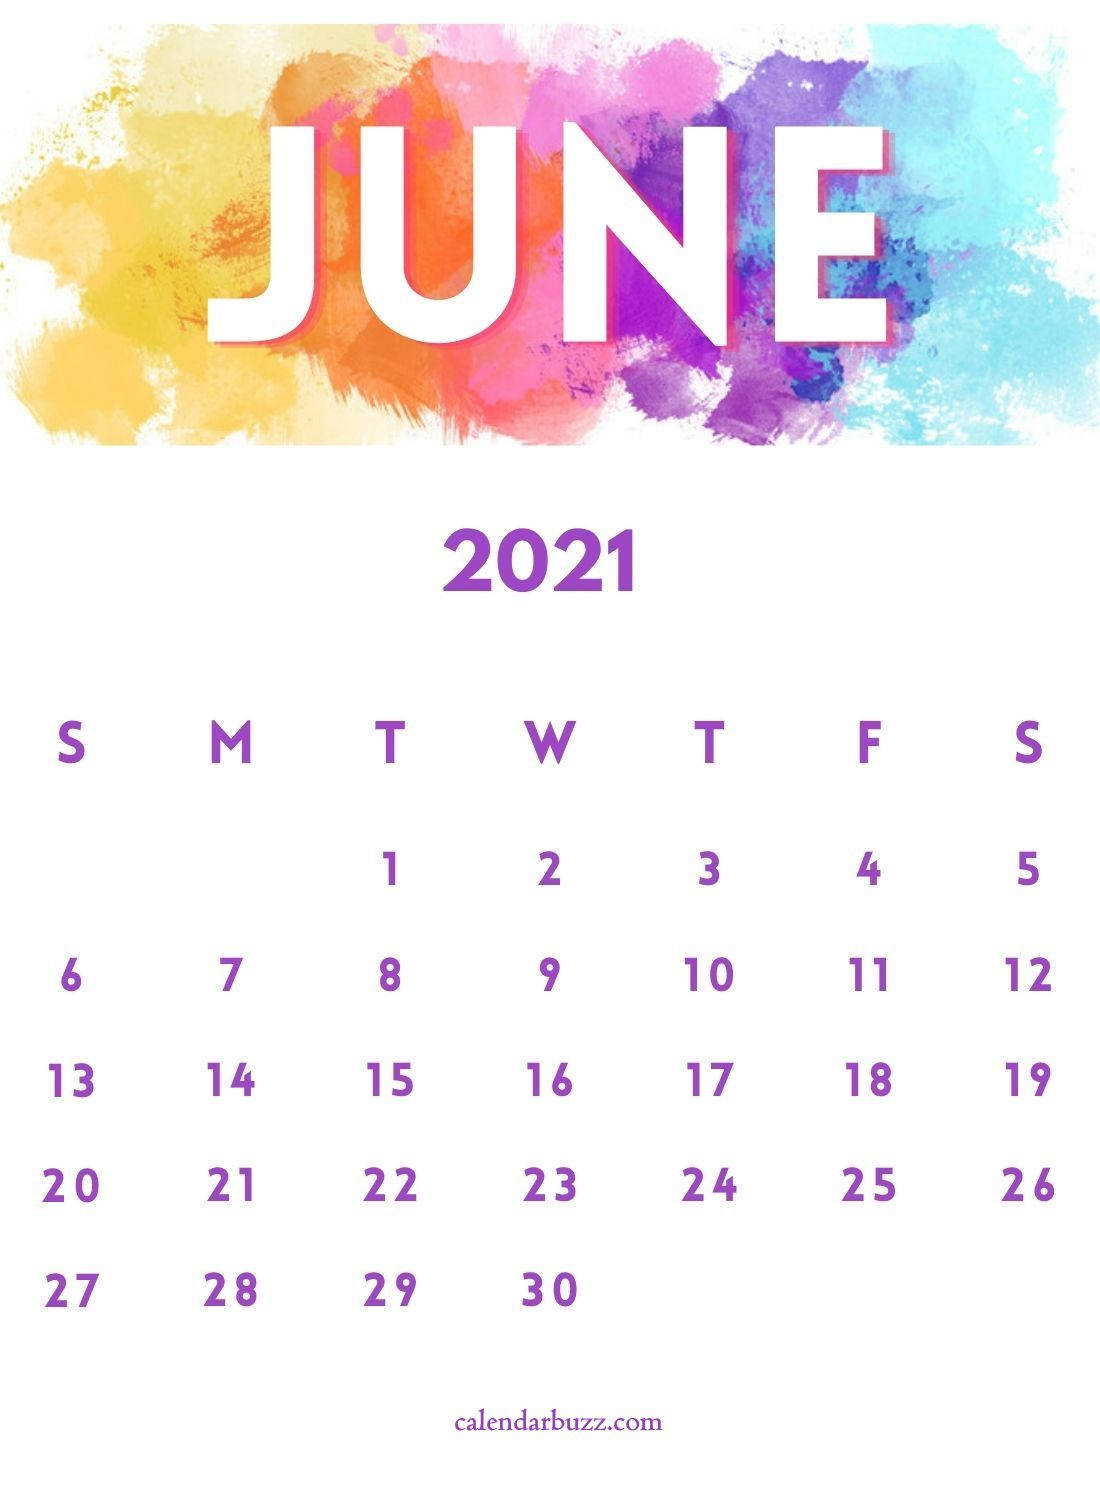 June Calendar With Pop Of Colors 2021 Wallpaper